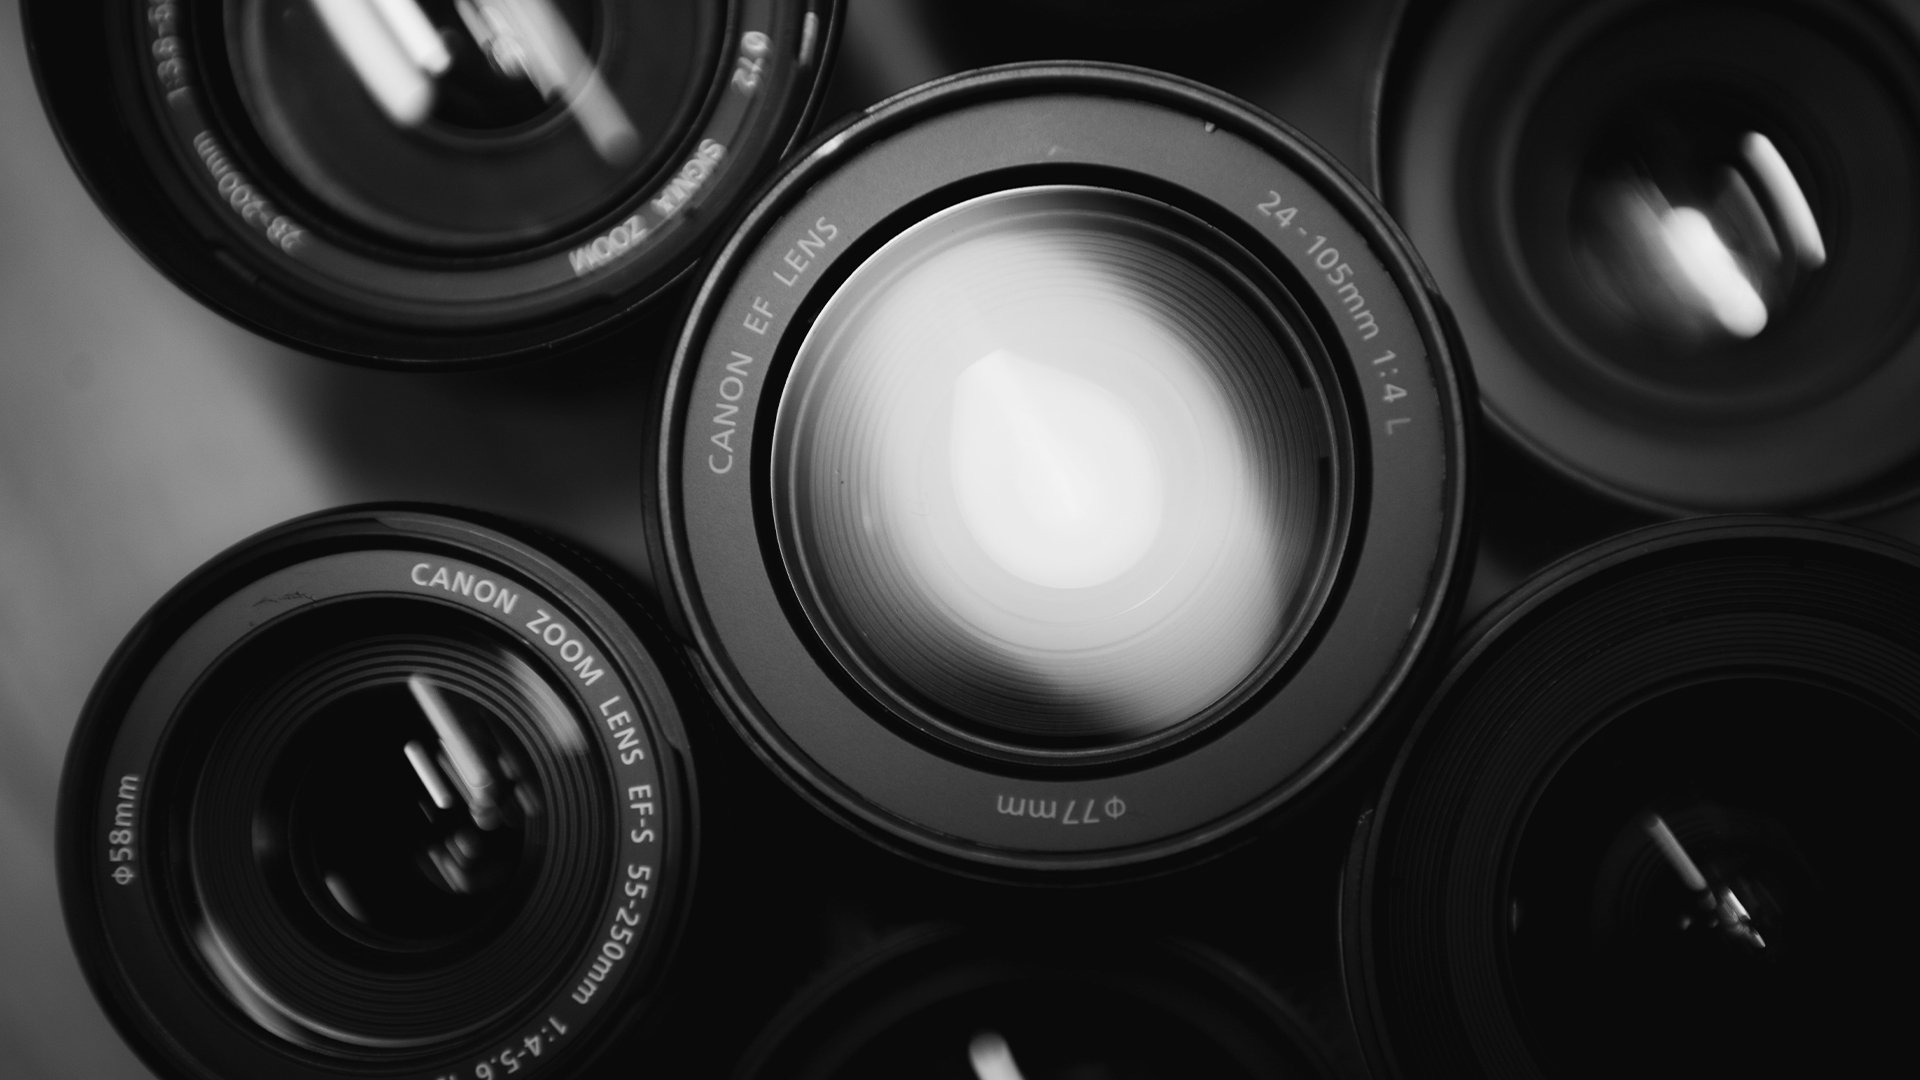 focal length camera lenses